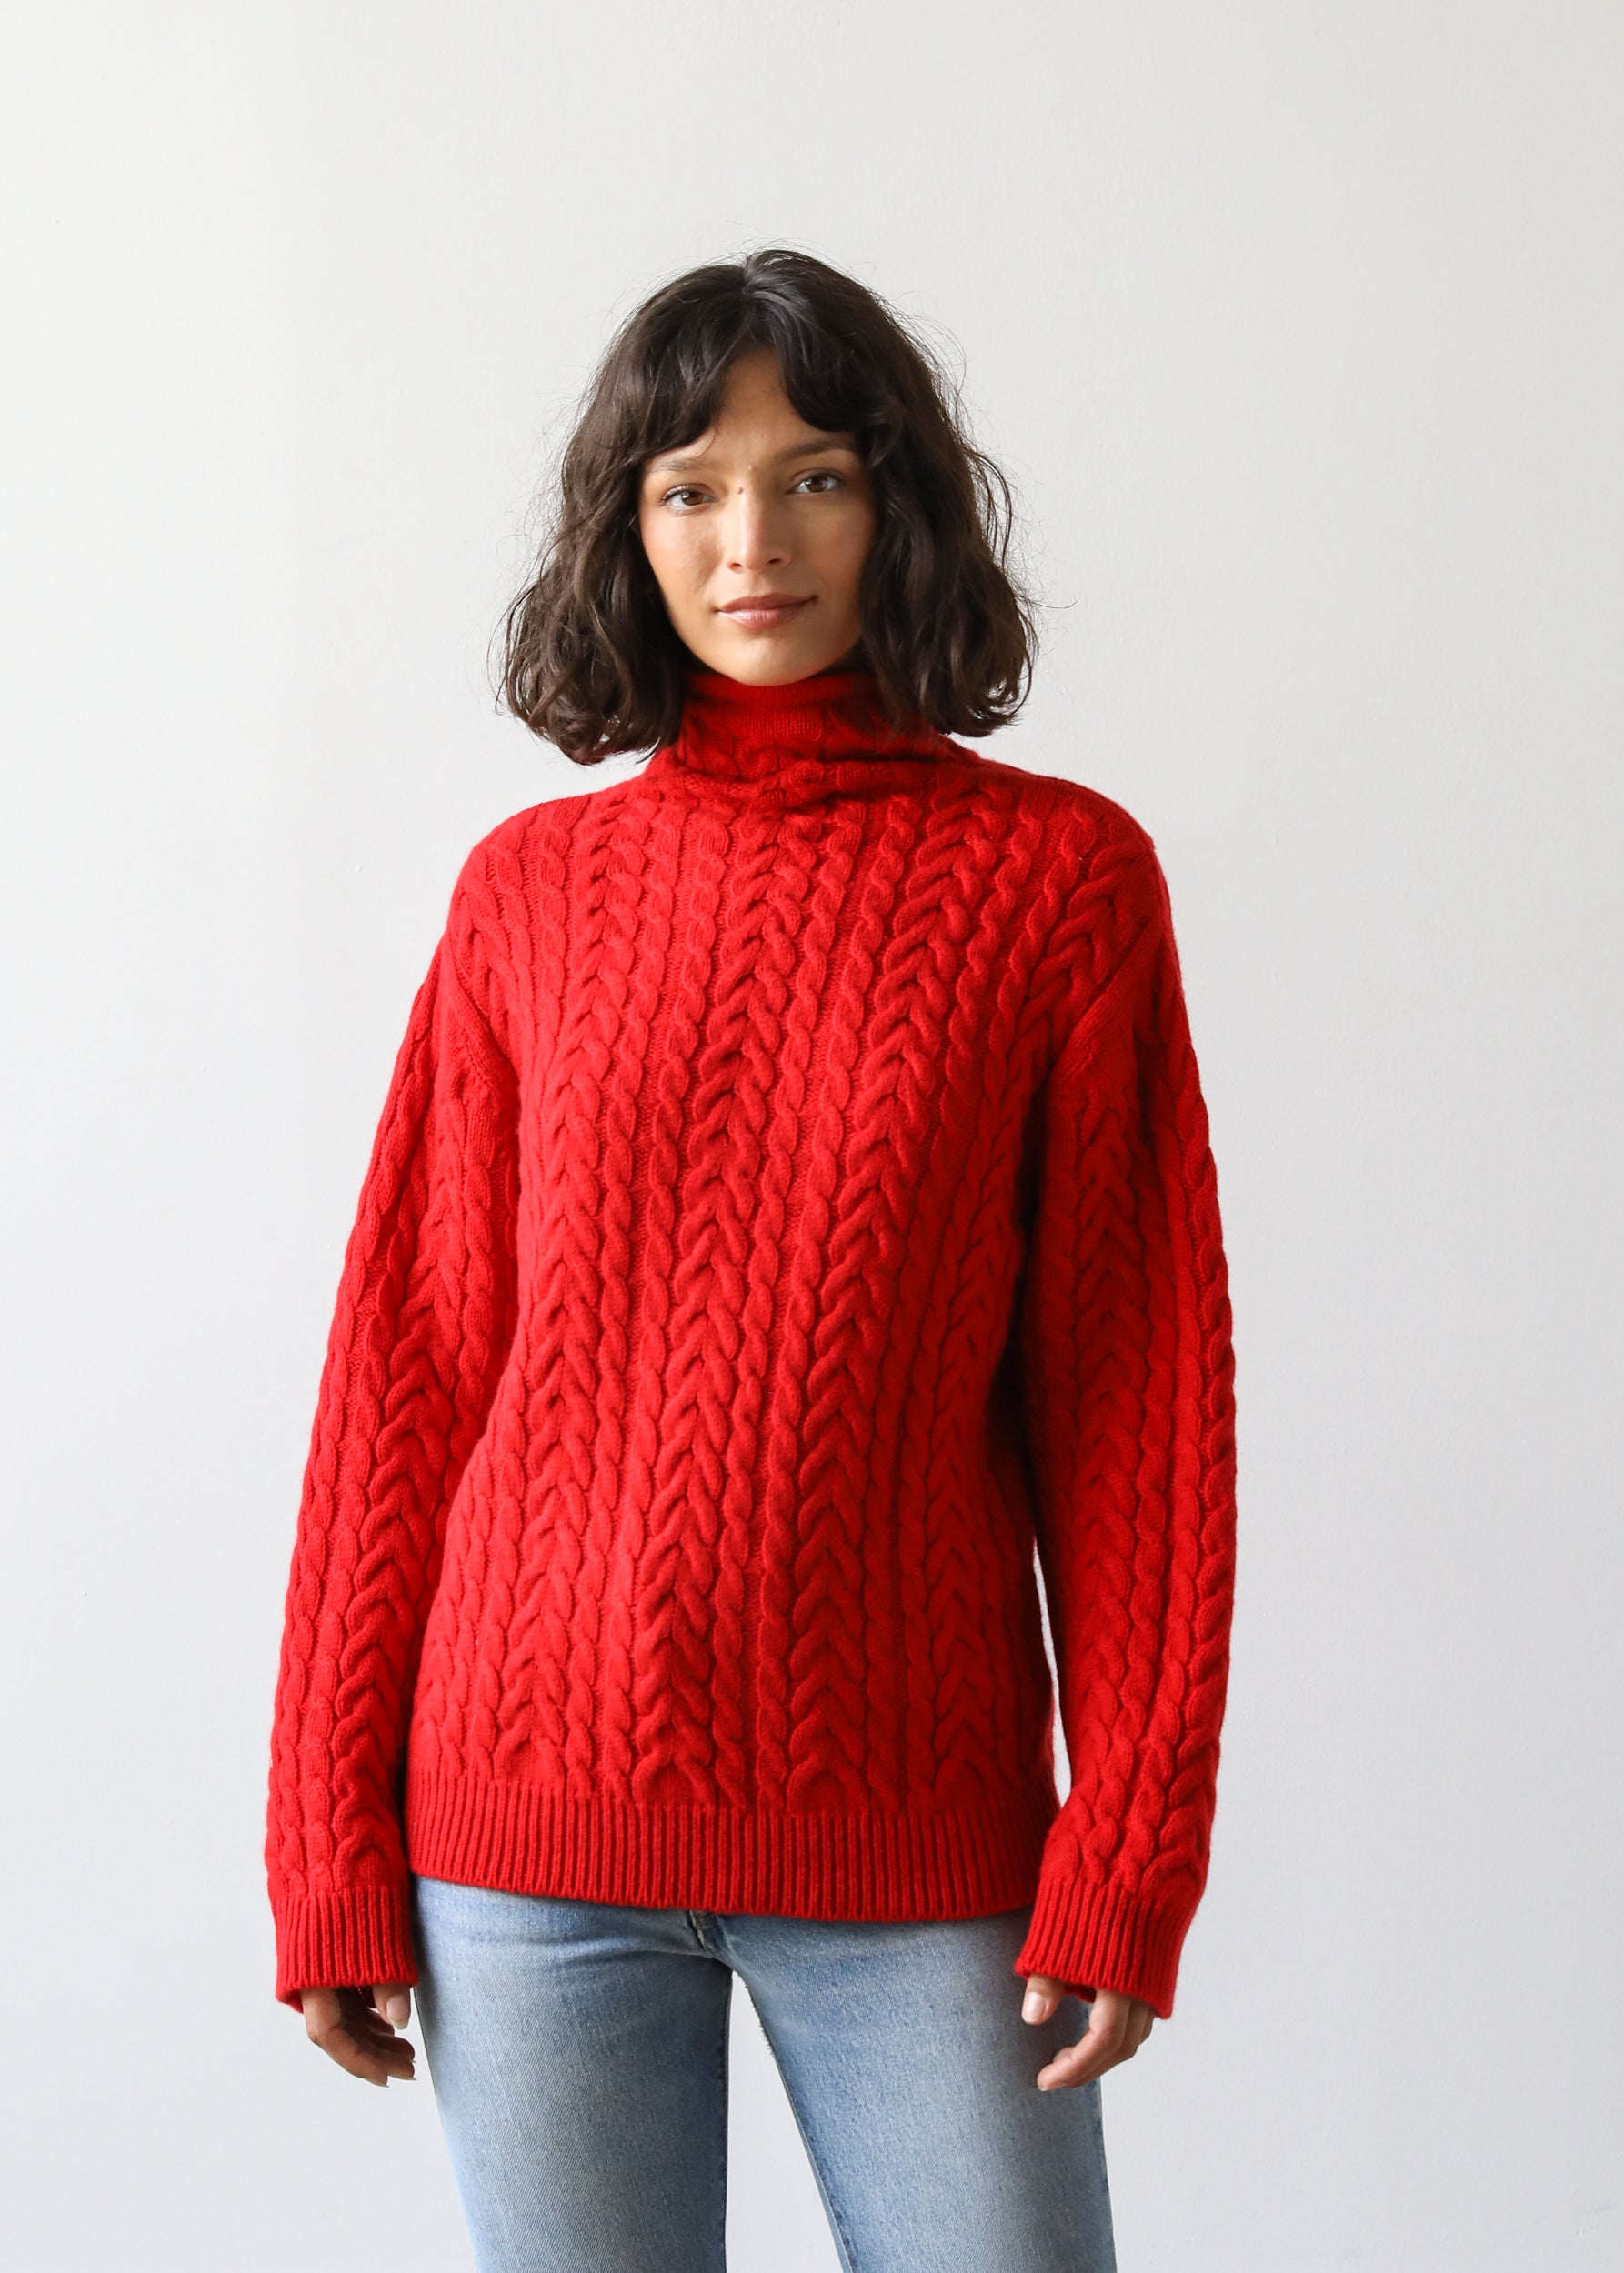 Estella NYC Beatrice Sweater in Scarlett Red Cashmere